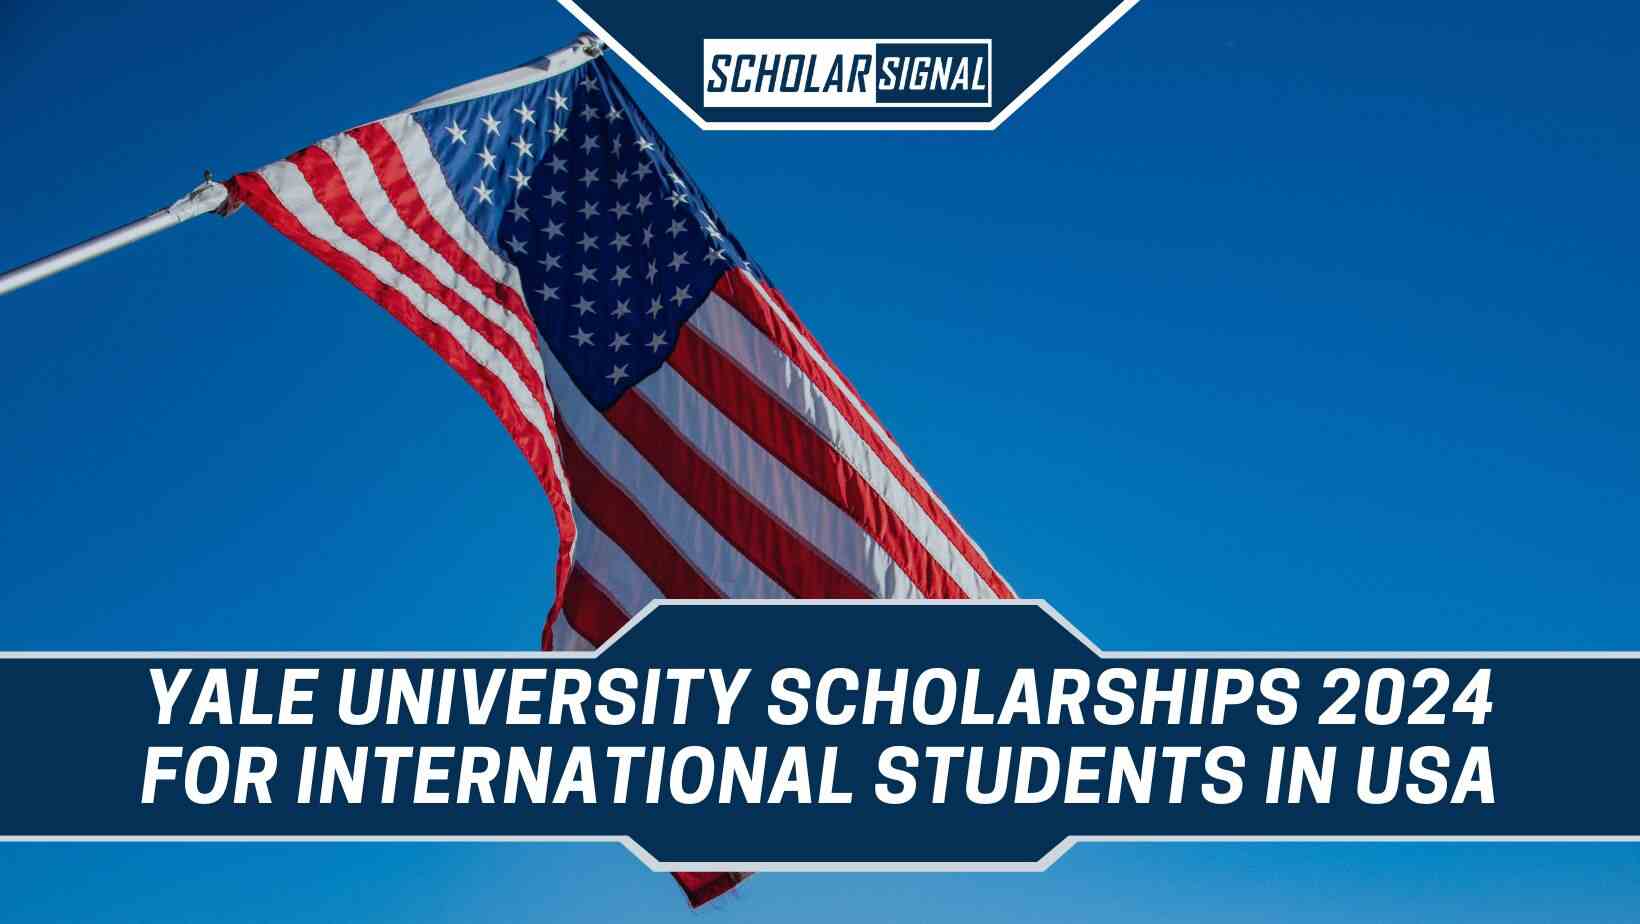 Yale University Scholarships in the USA 2024 Empowering International